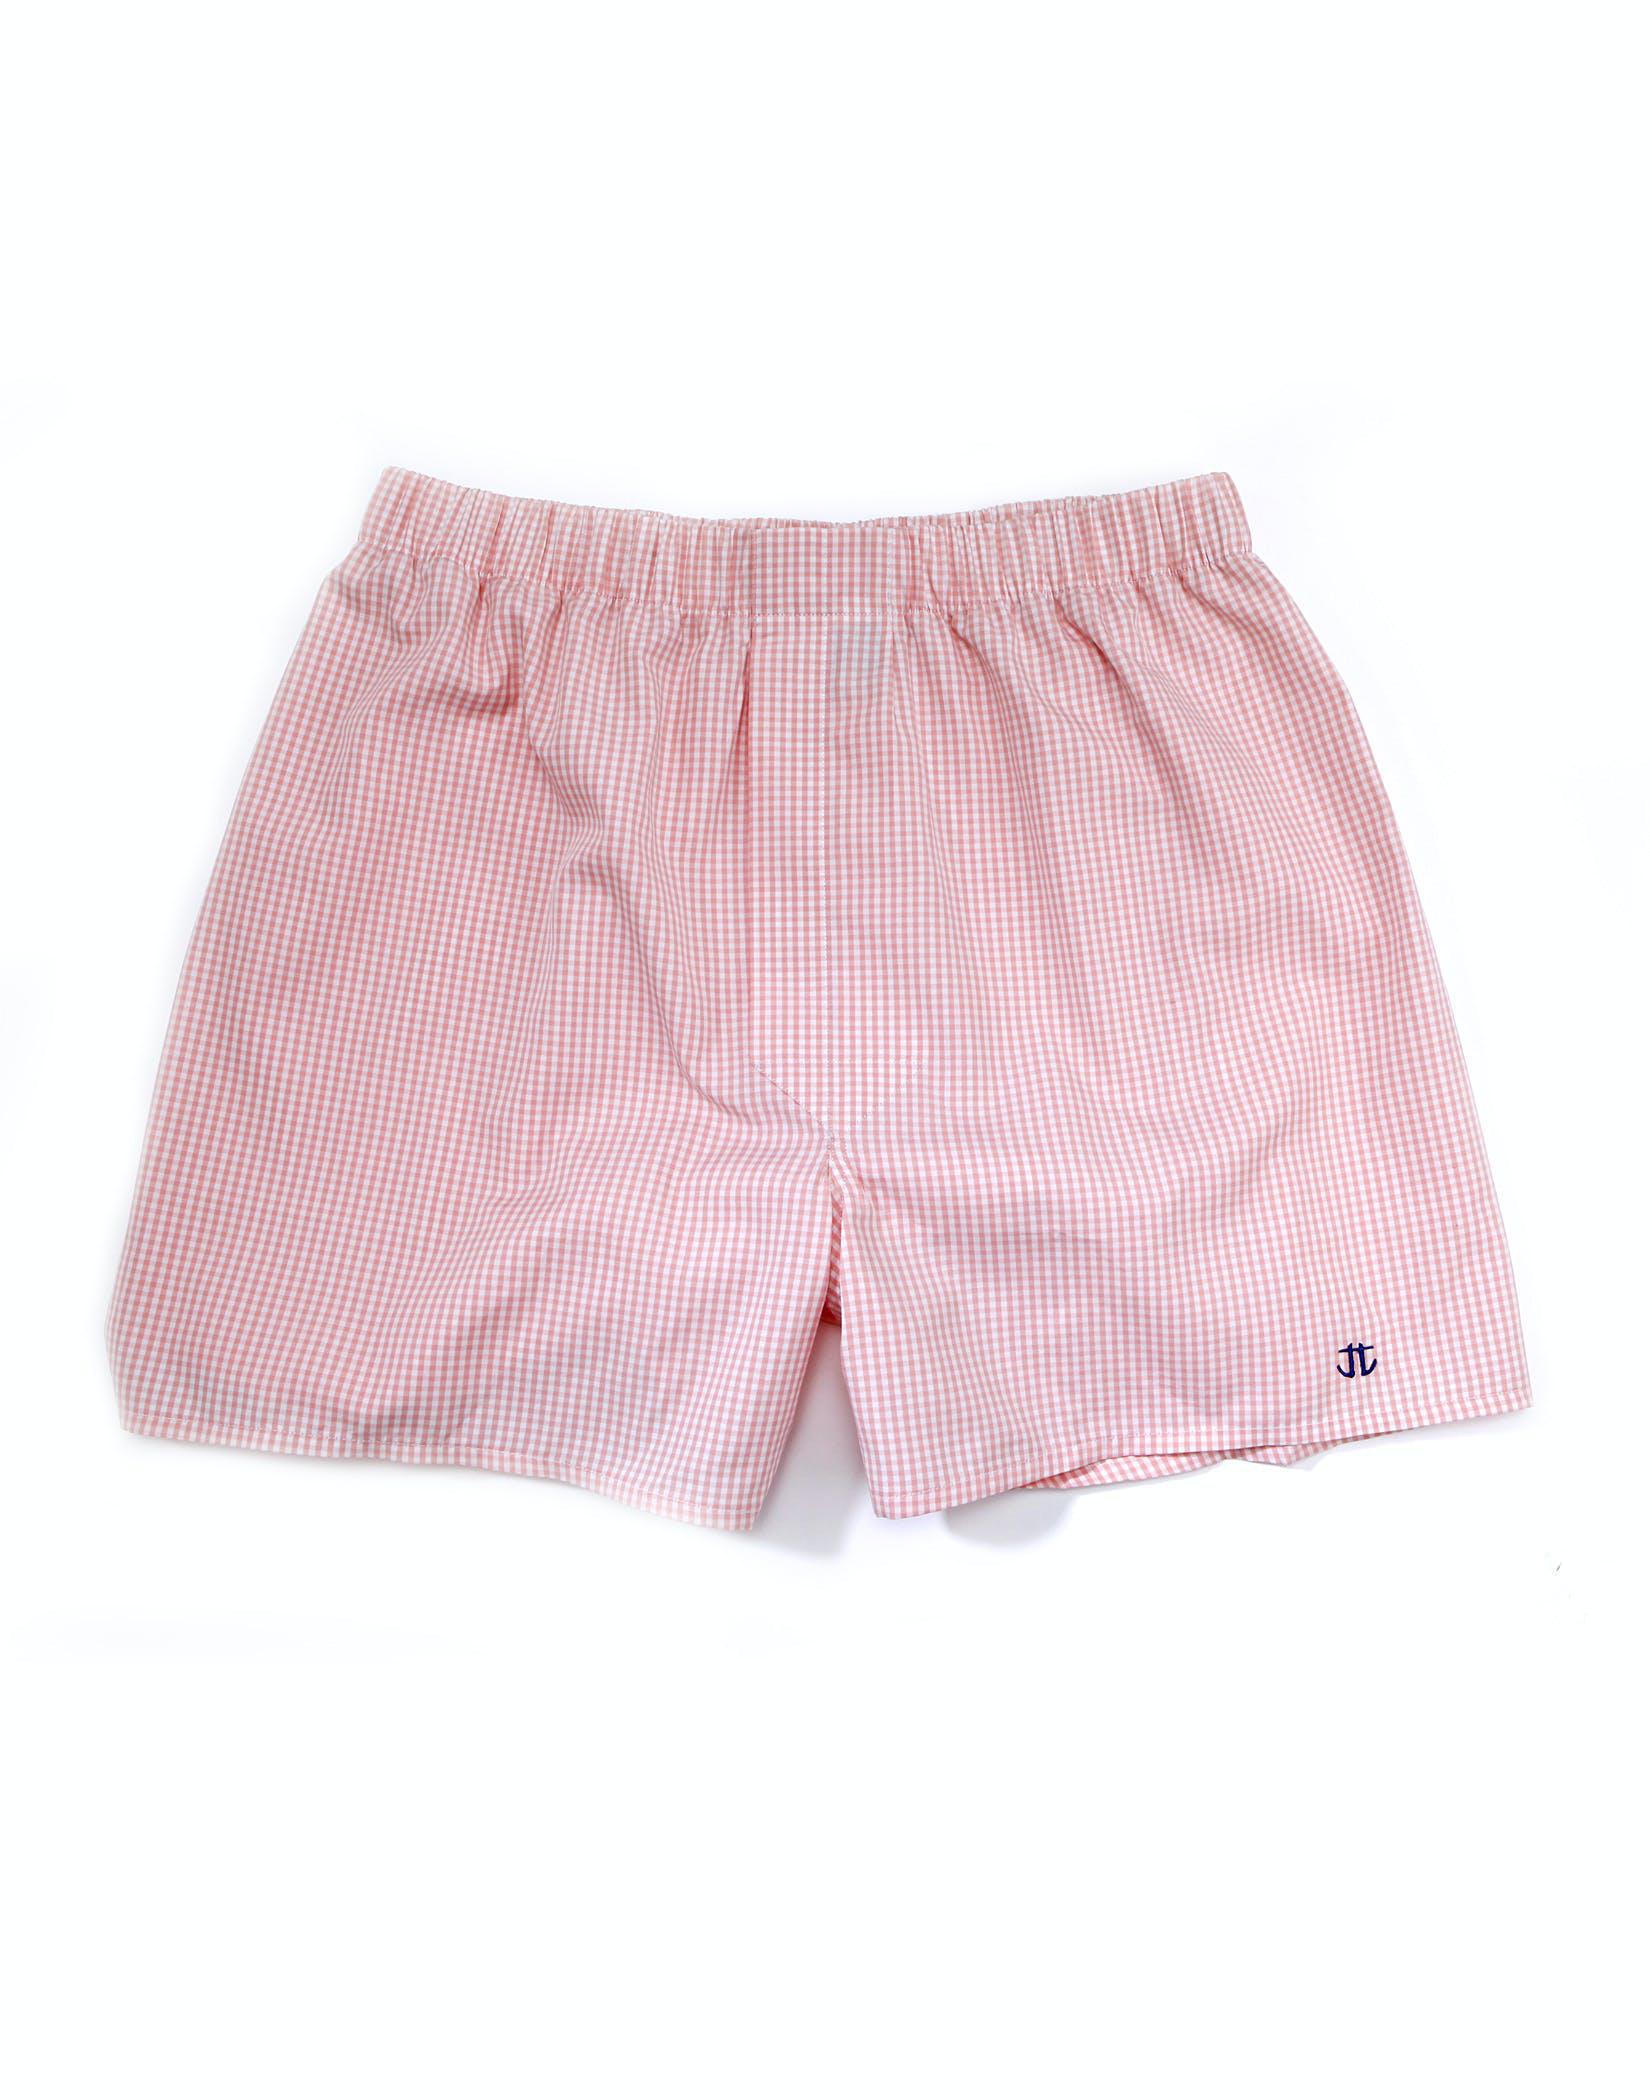 Boxer Shorts - Pink Gingham Check